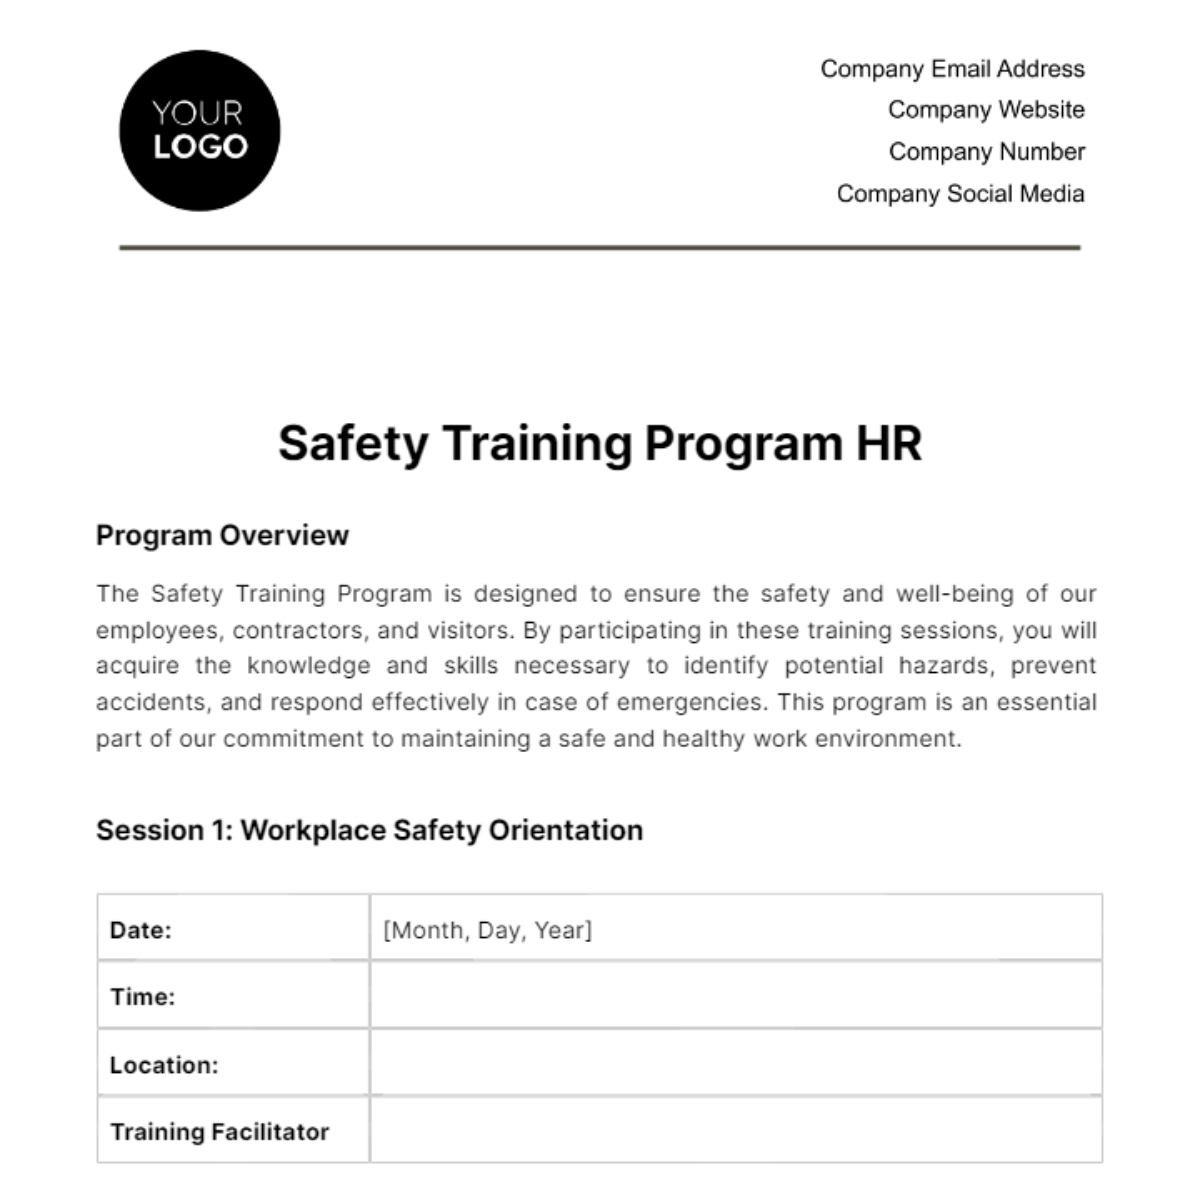 Free Safety Training Program HR Template